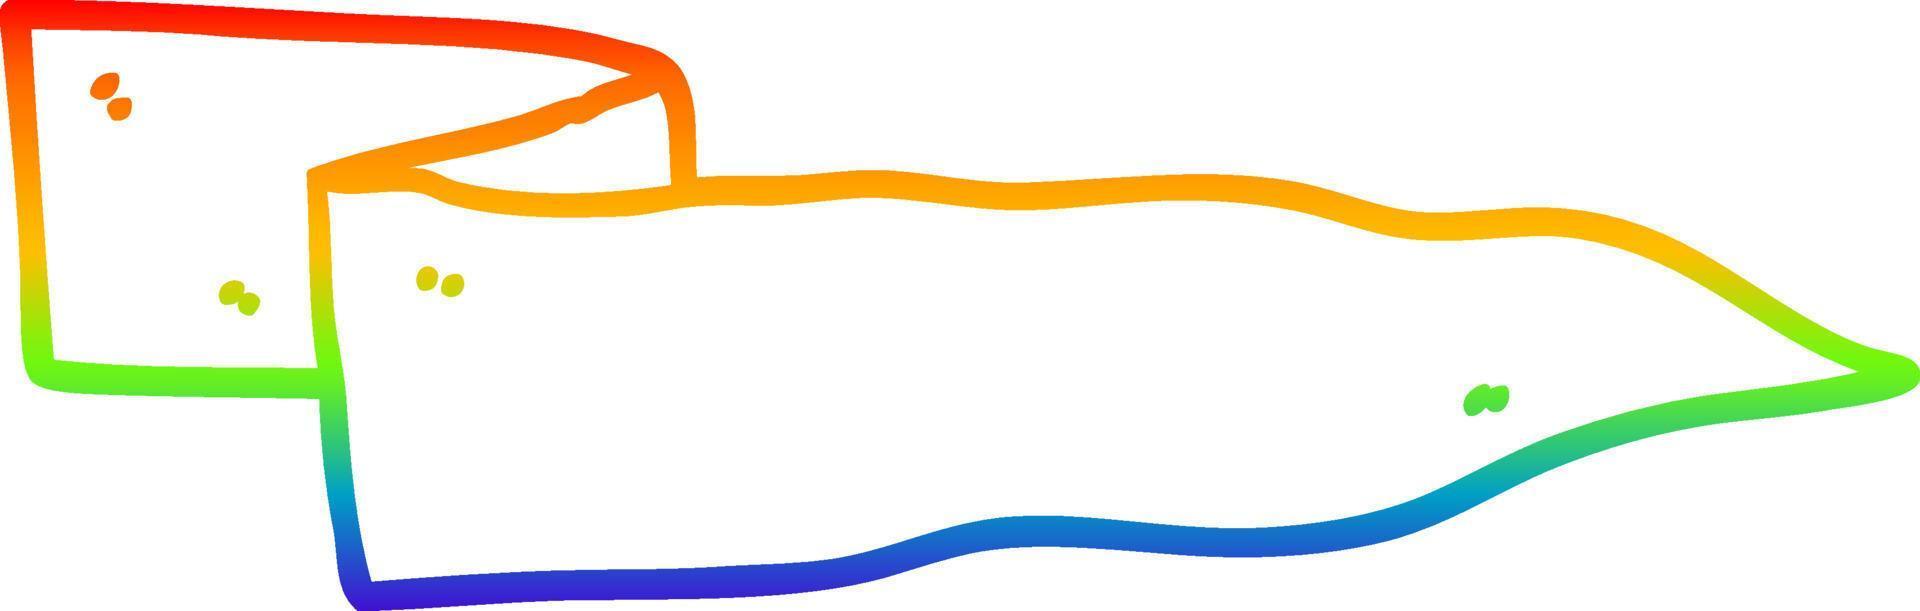 arco iris gradiente línea dibujo dibujos animados agitando banner vector